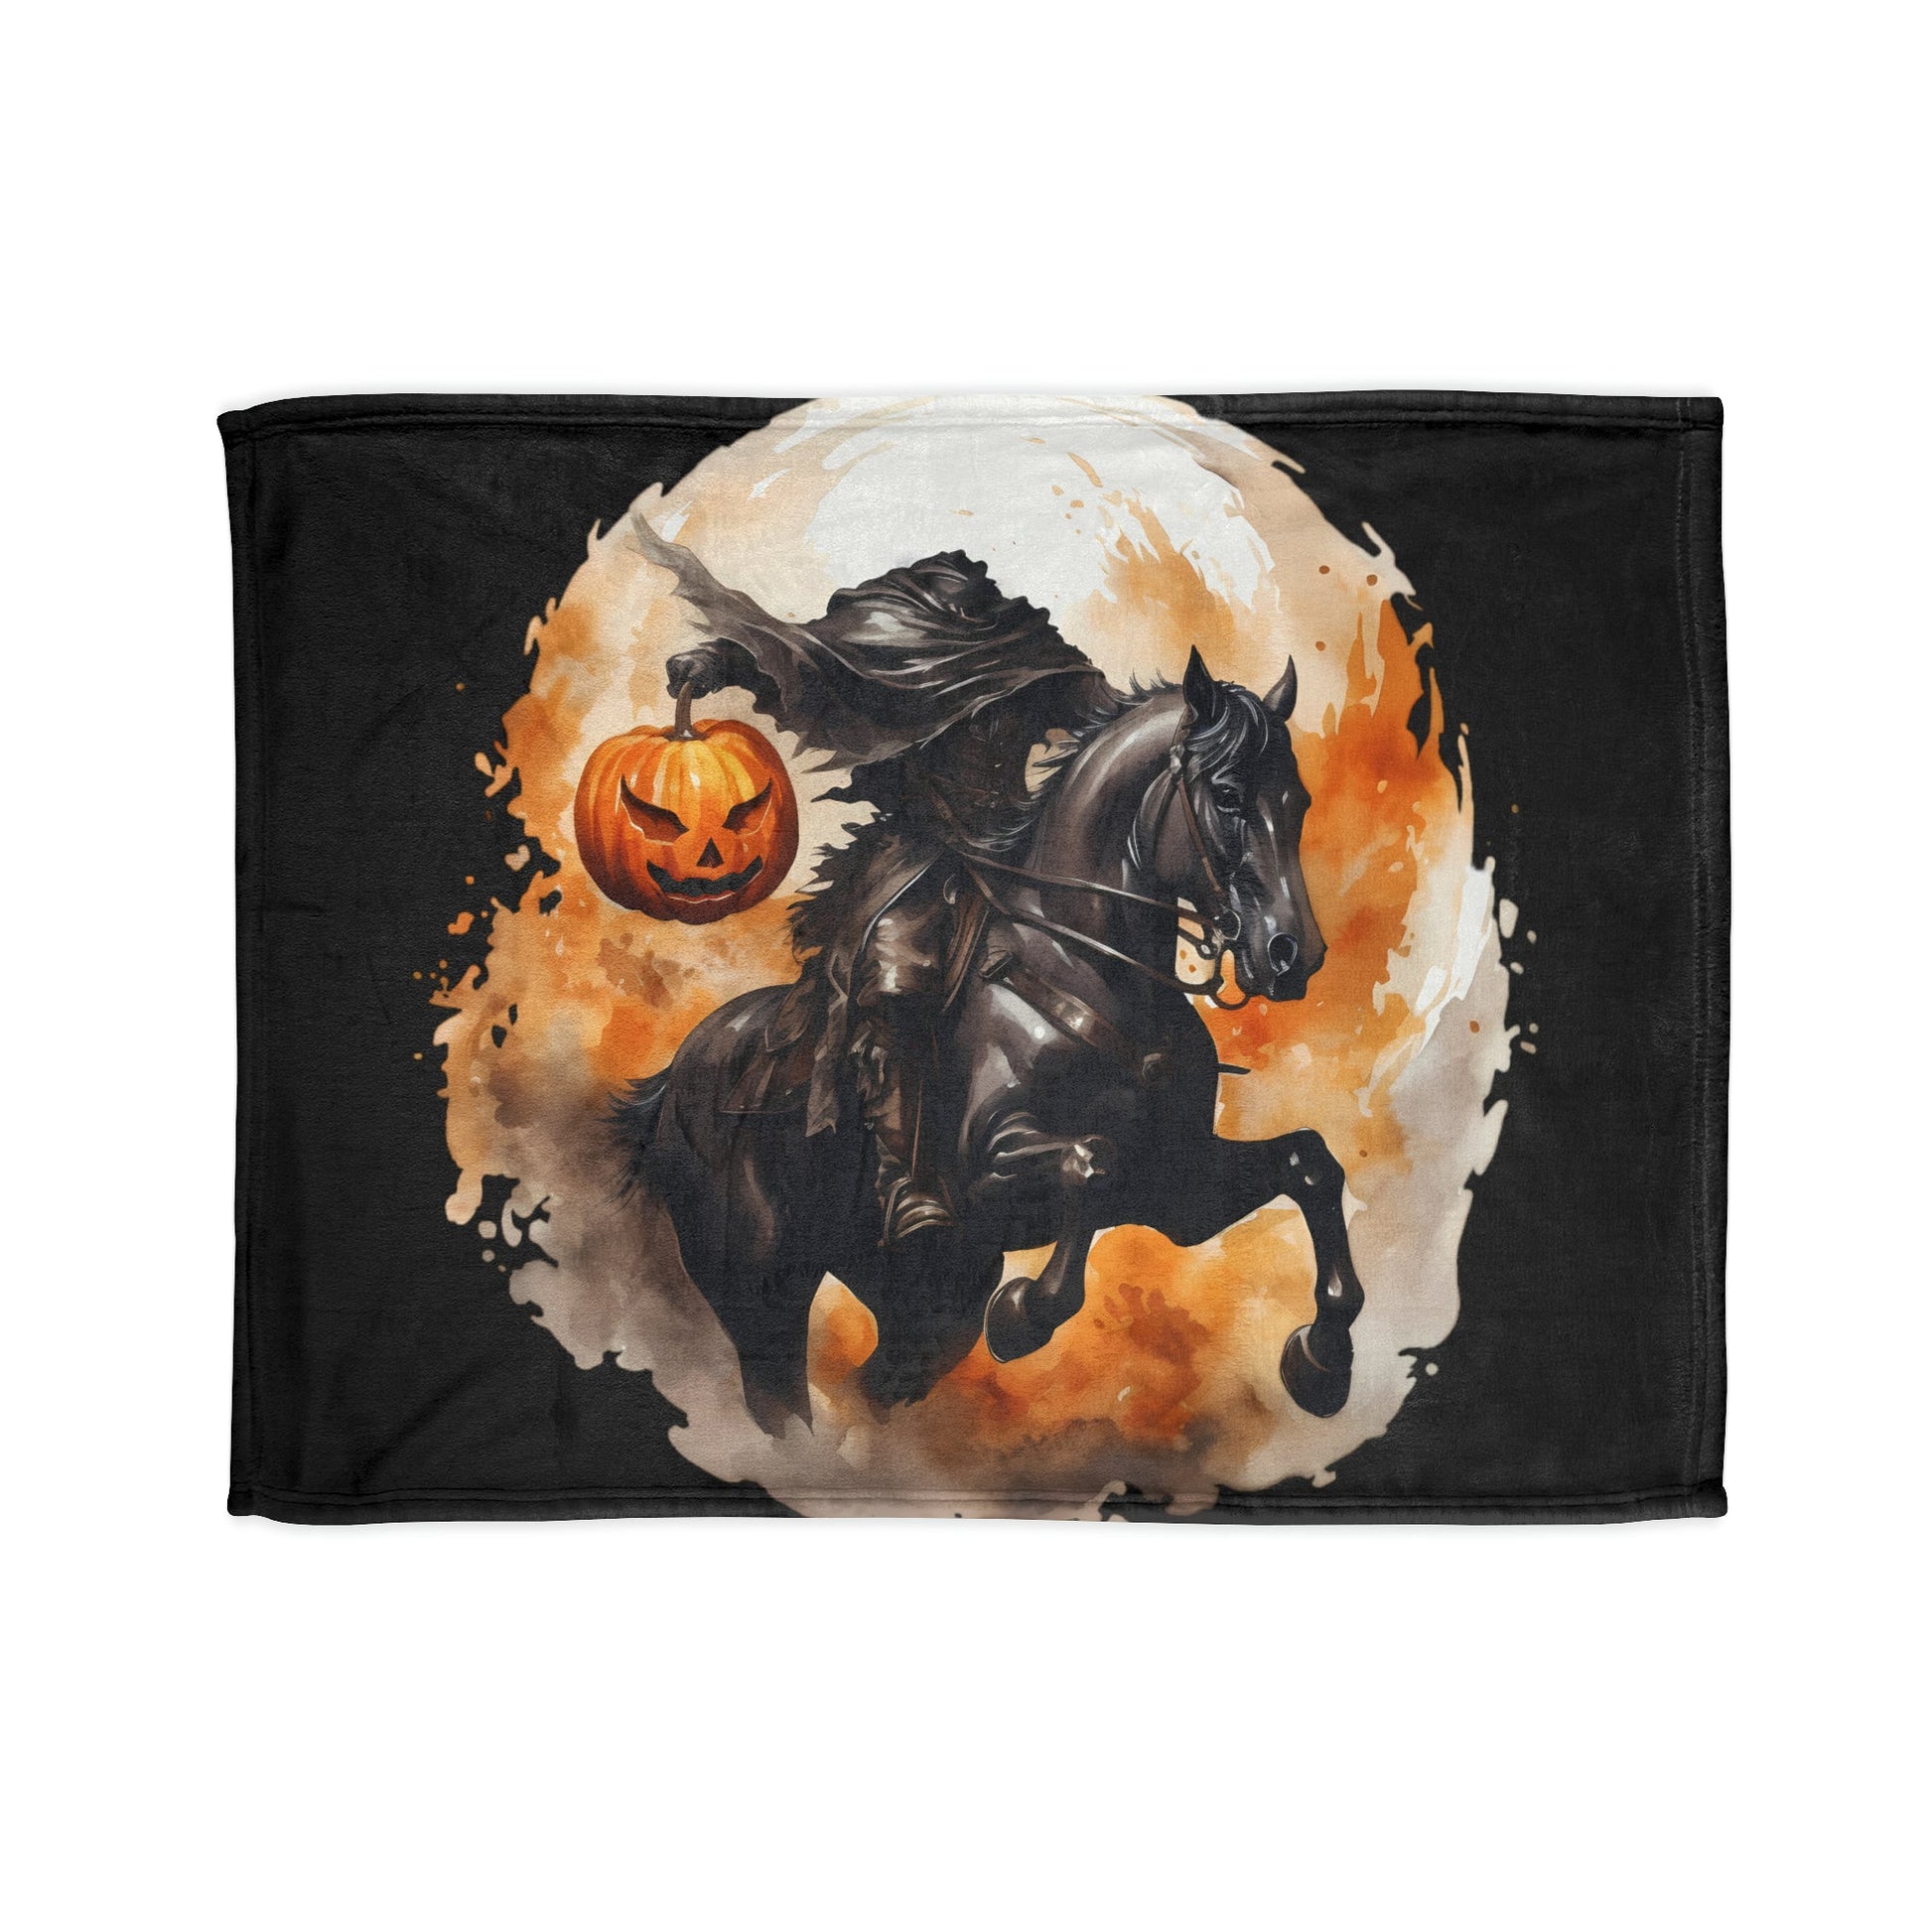 Headless Horseman Throw BlanketHome DecorVTZdesigns30'' × 40''BedBeddingBlankets